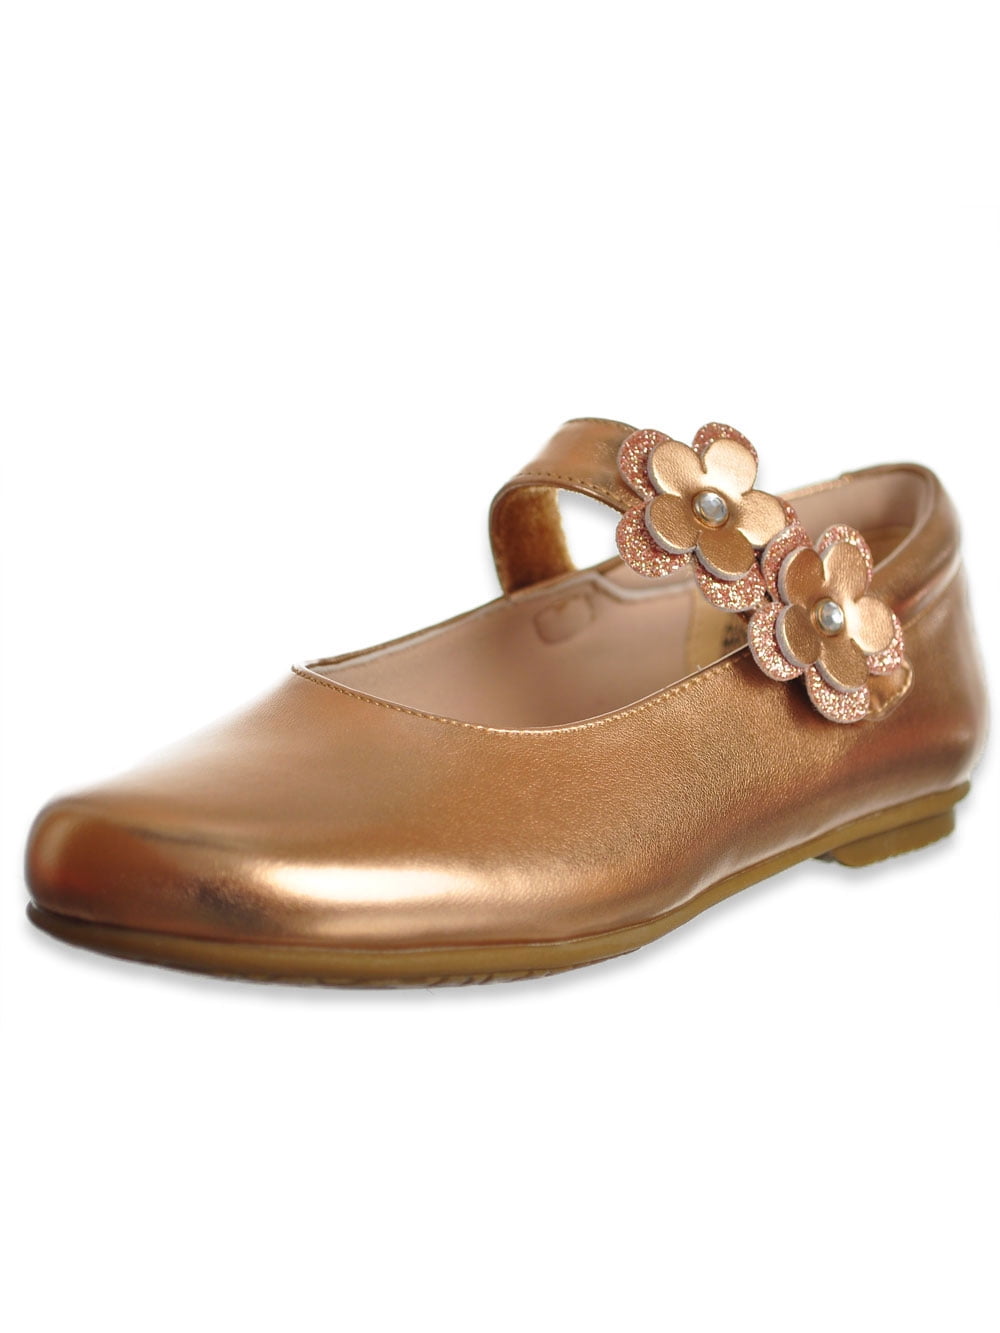 walmart rose gold shoes